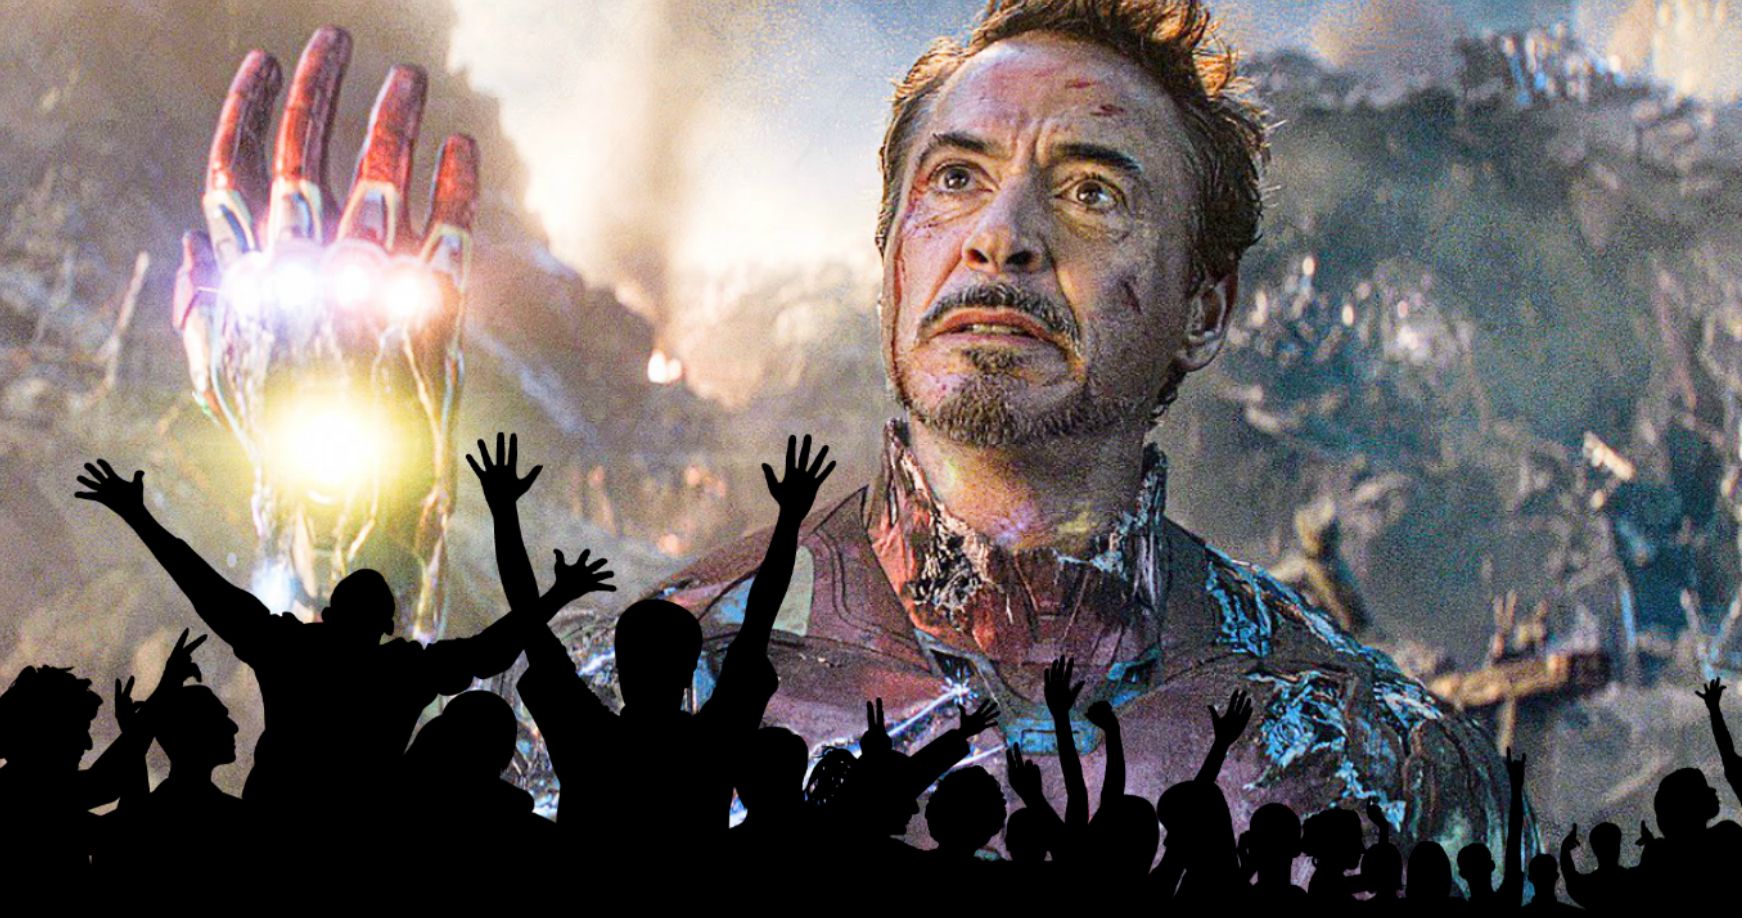 Avengers: Endgame Directors Share Opening Night Reaction to 'I Am Iron Man' Scene